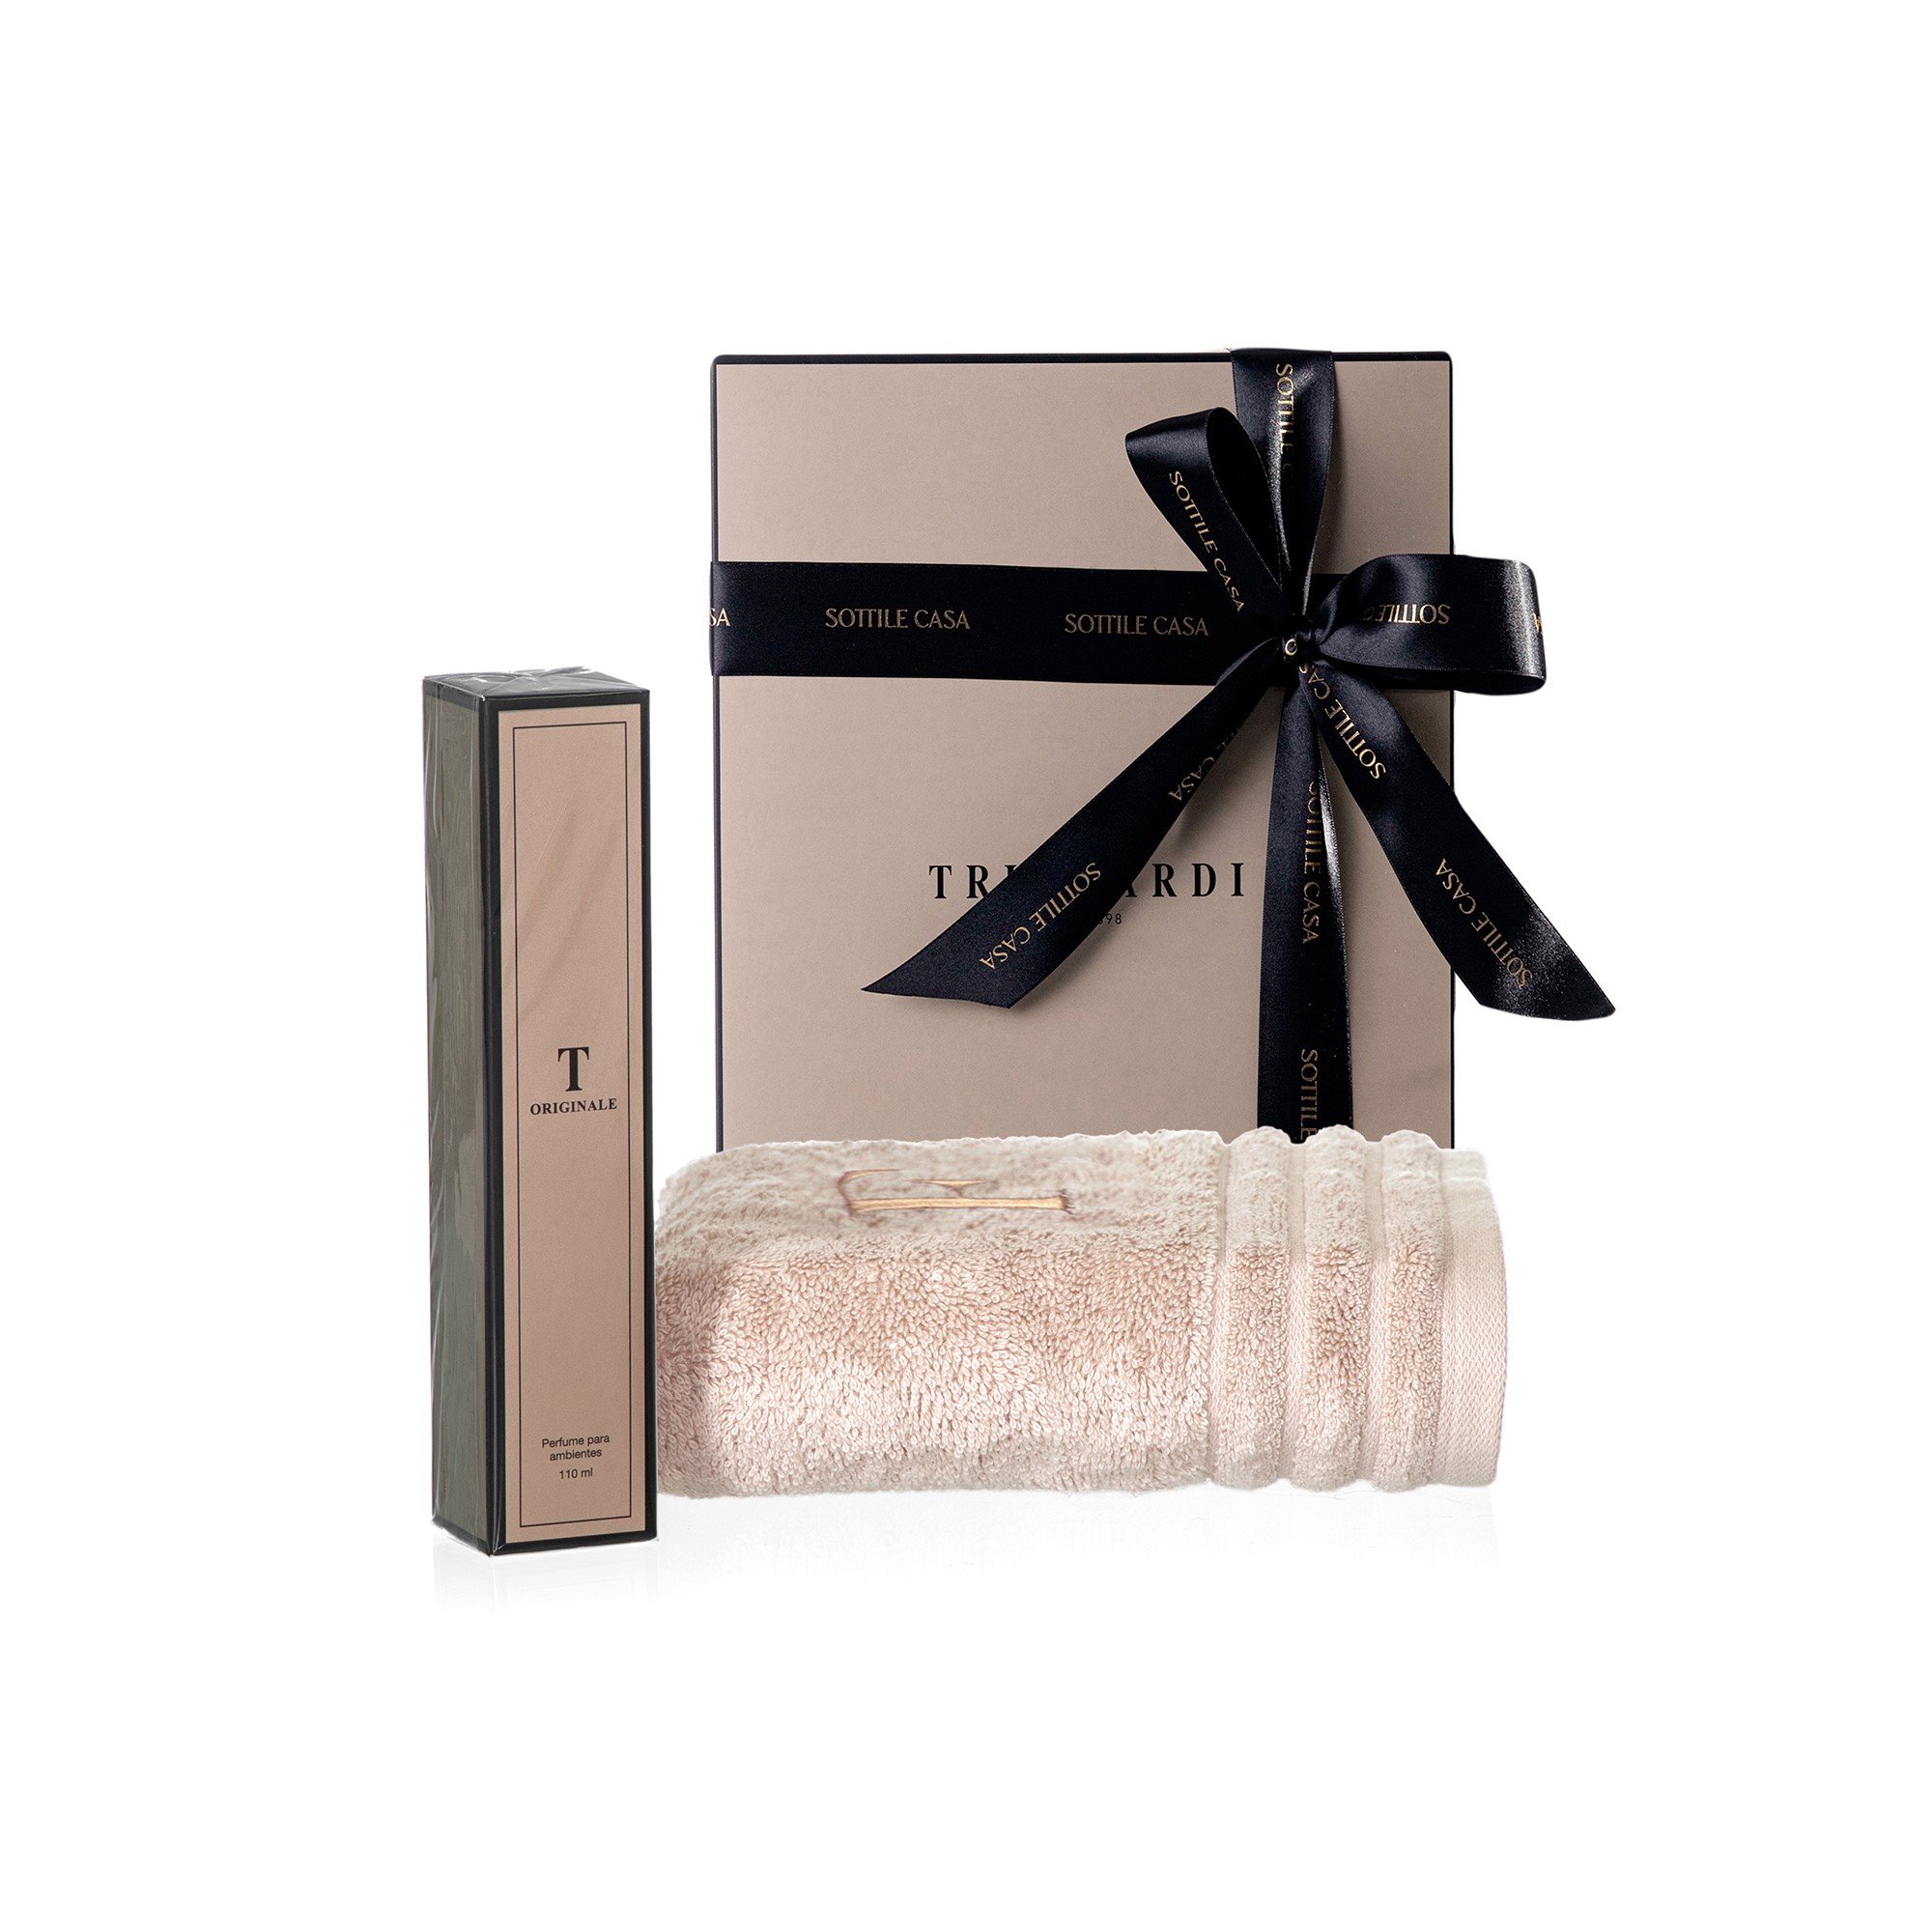 kit toalha de rosto 100 algodao trussardi imperiale branco com perfume para ambientes trussardi 110ml originale com caixa de presen